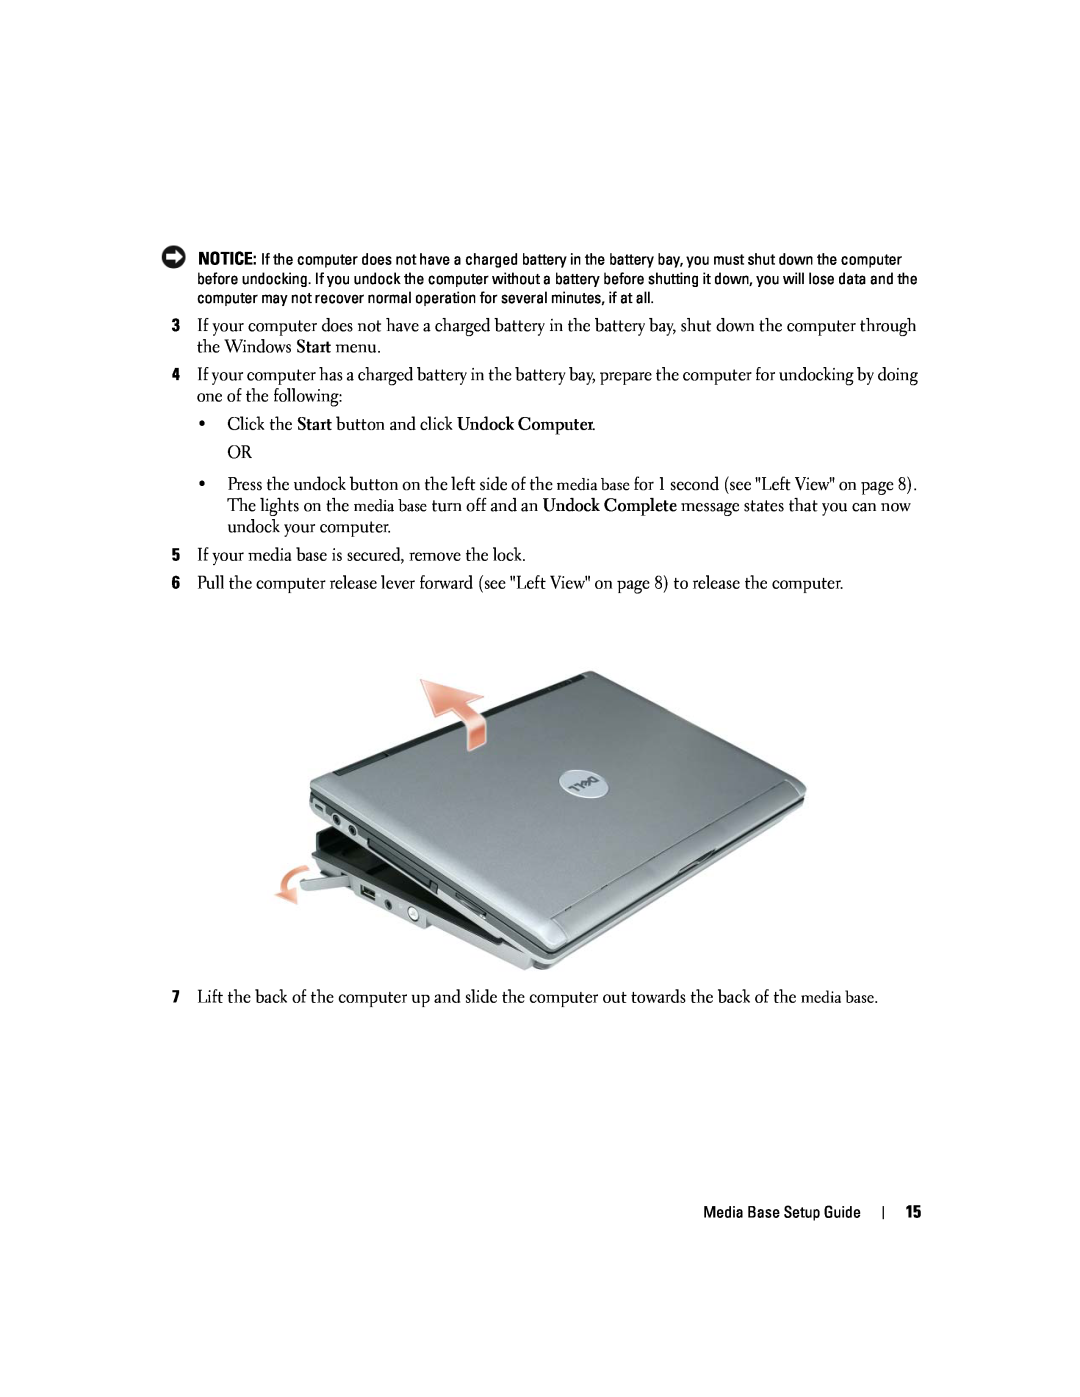 Dell Model PR09S setup guide Click the Start button and click Undock Computer OR 